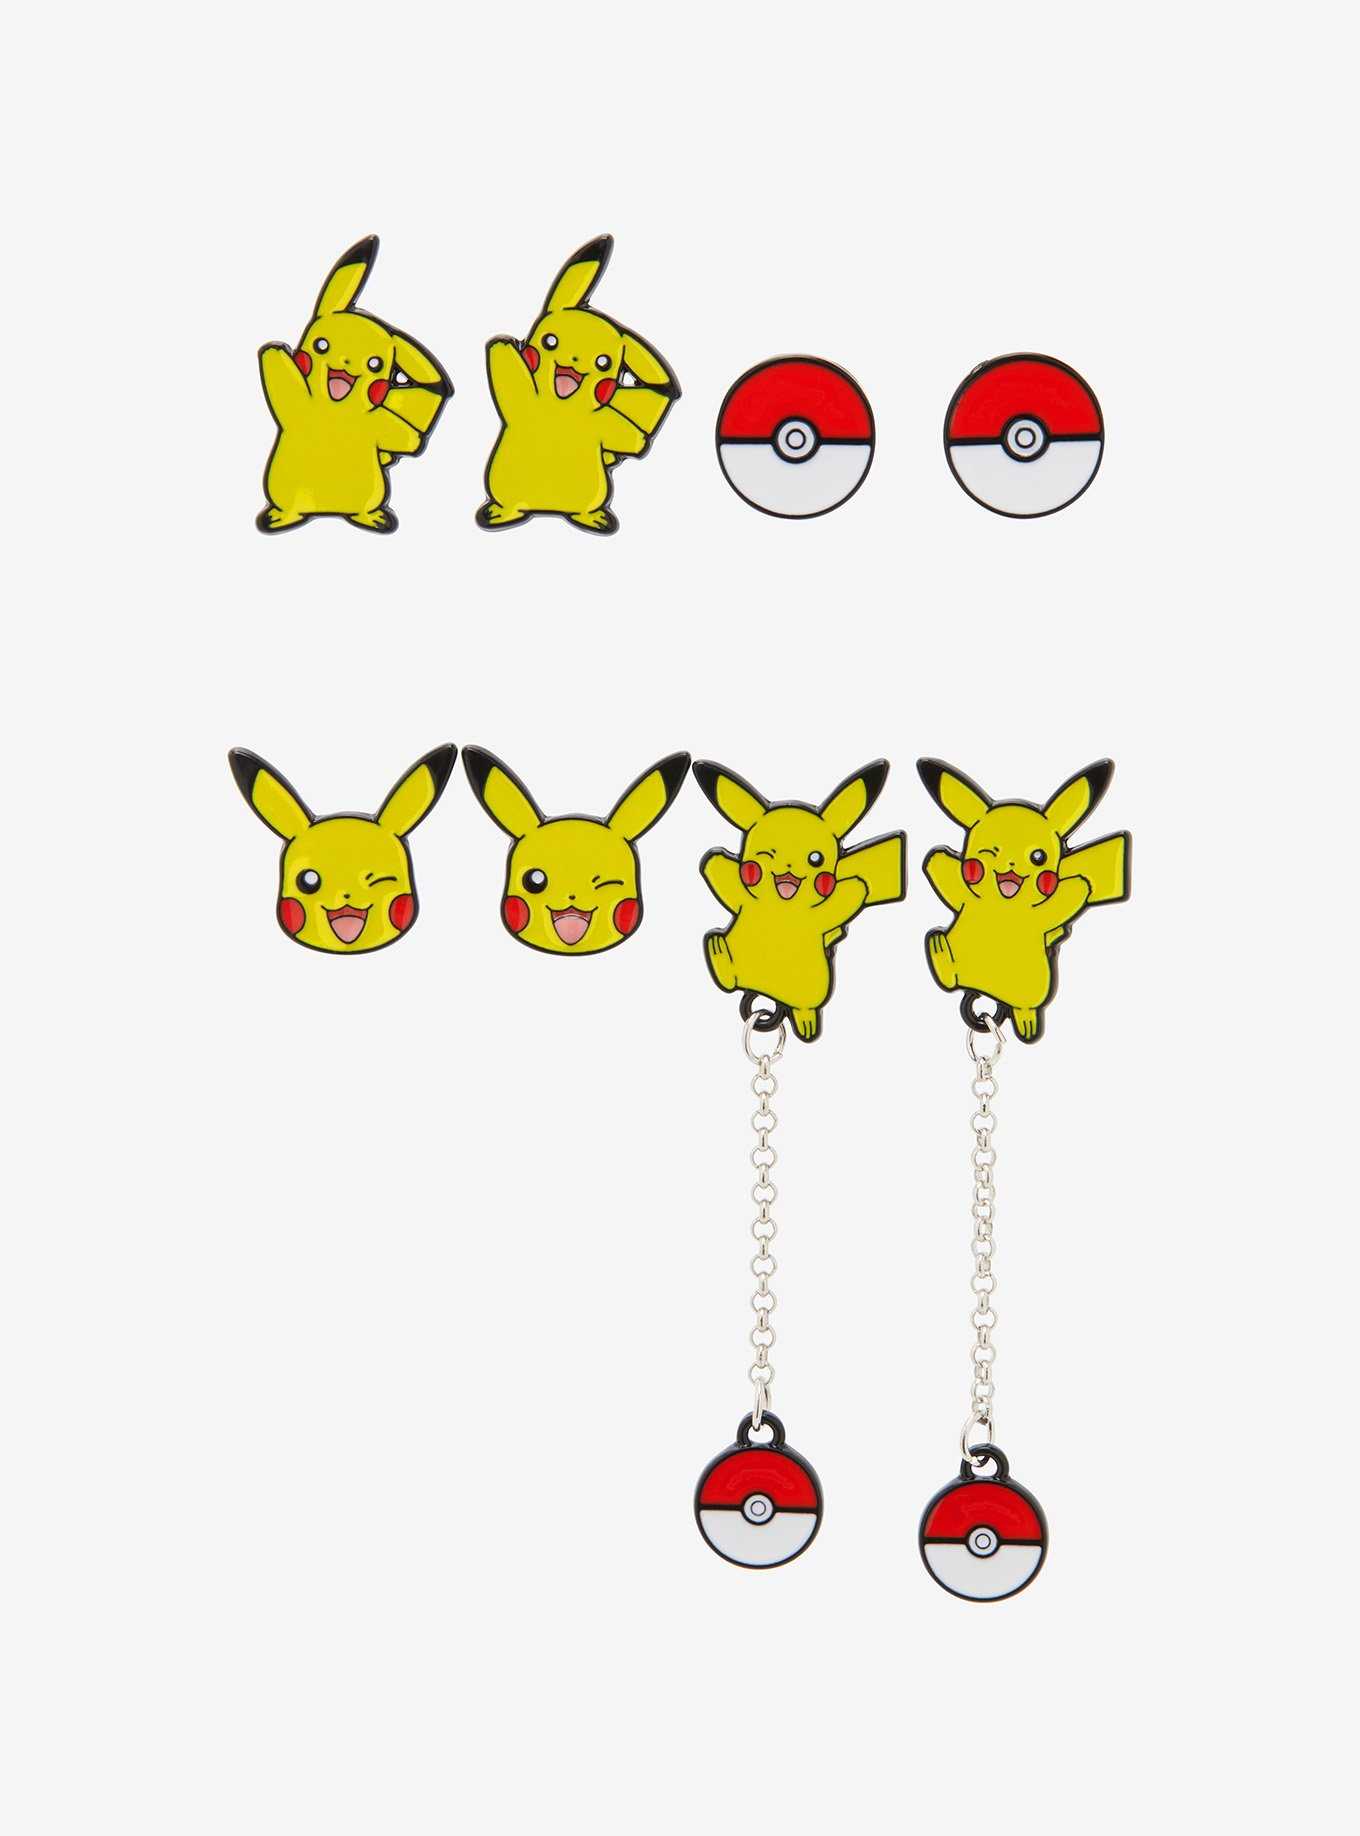 Pokemon Pikachu Poke Ball Earring Set, , hi-res